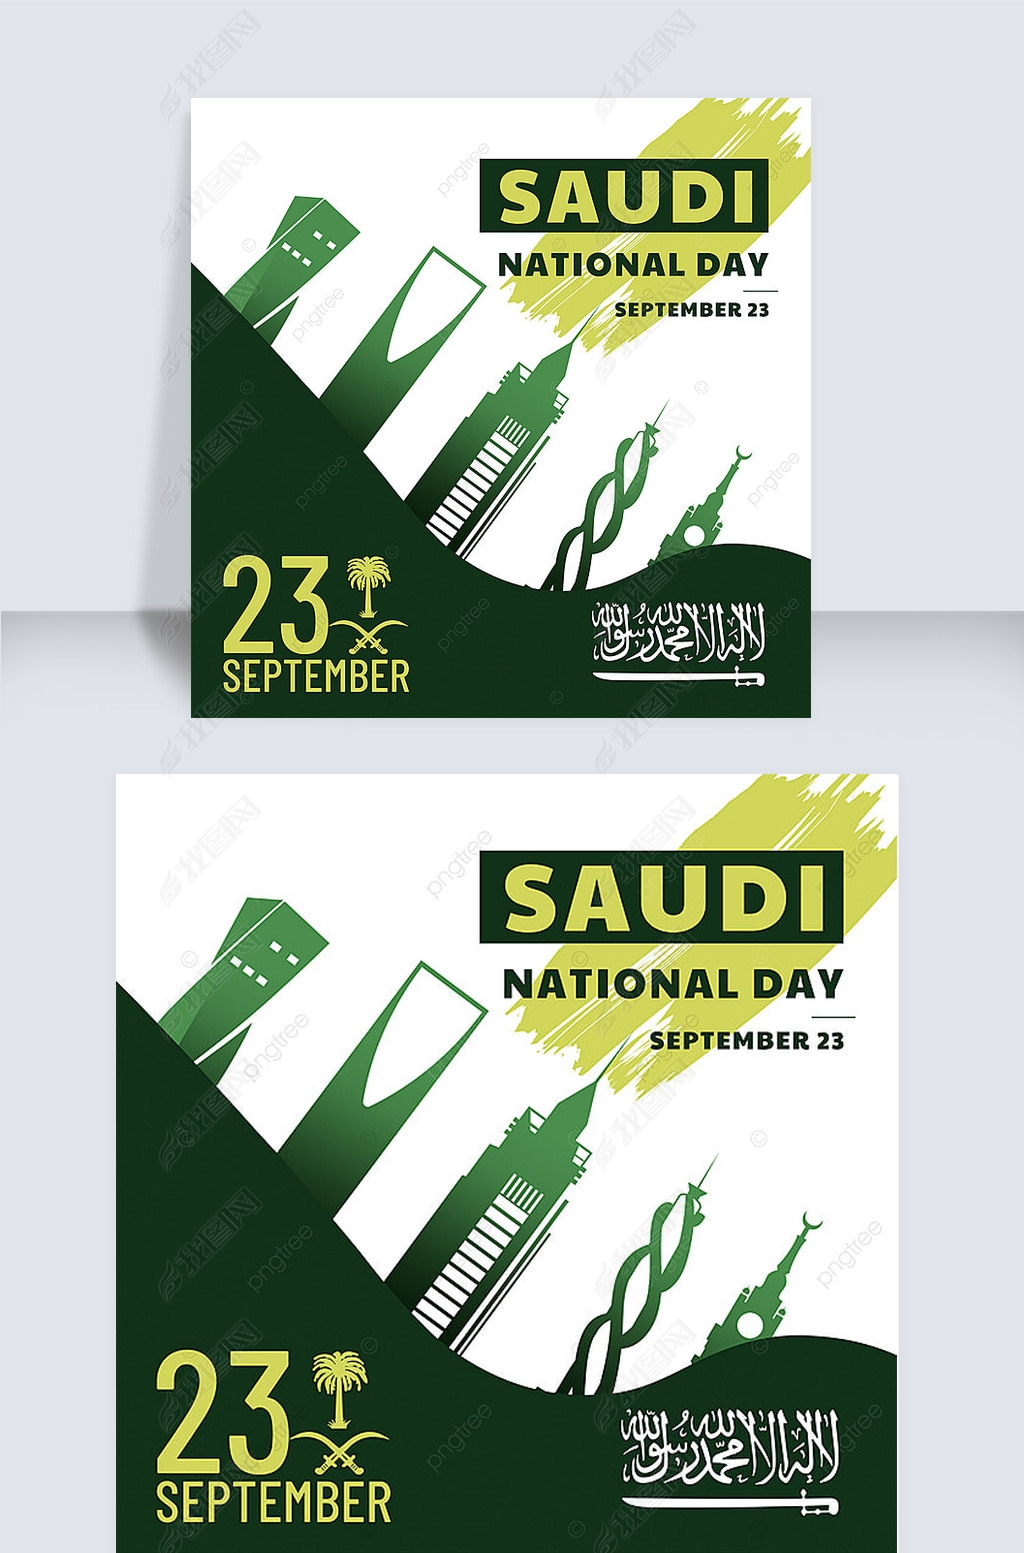 saudi national day simplicity and creativity social media post